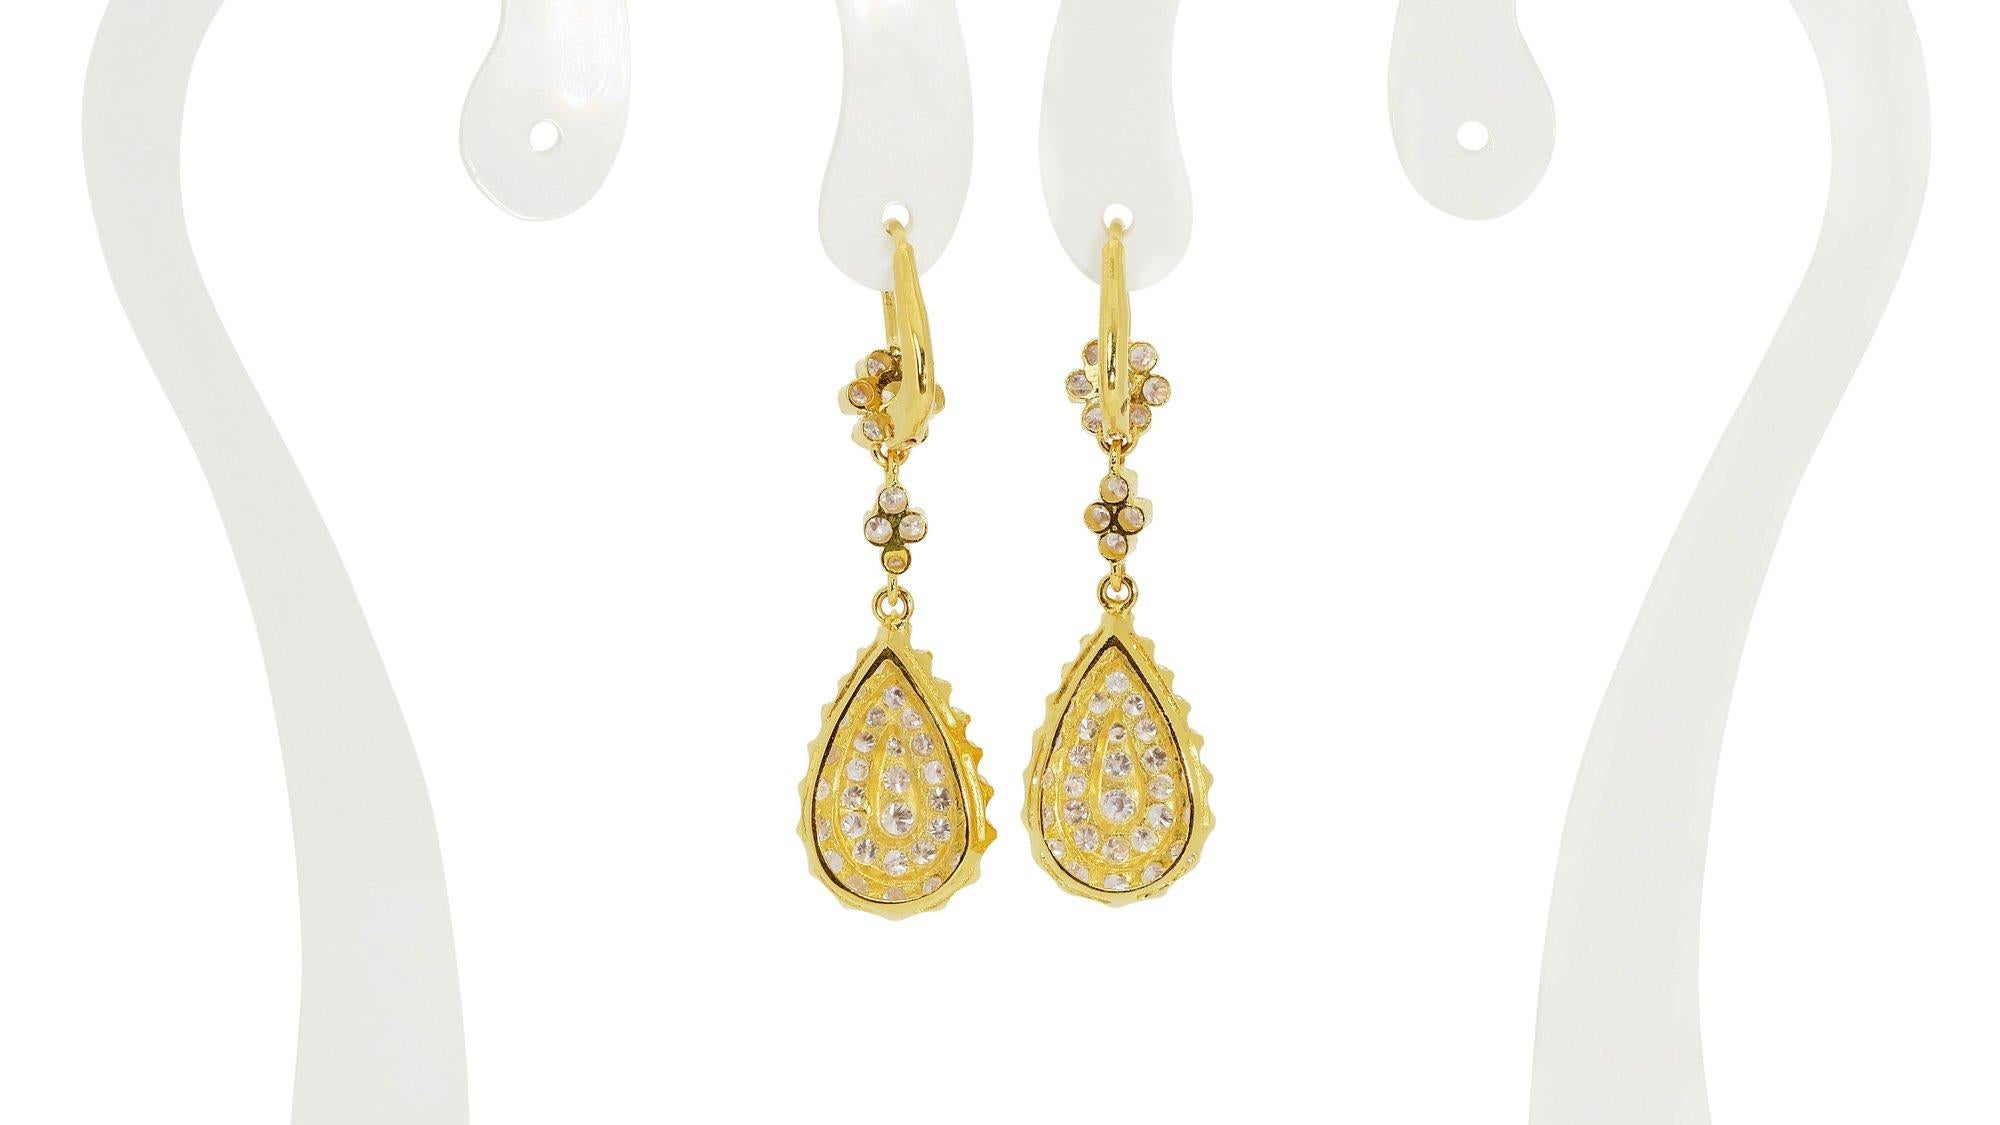 Marvelous 18k Yellow Gold Drop Earrings w/ 2ct Natural Diamonds IGI Certificate For Sale 3